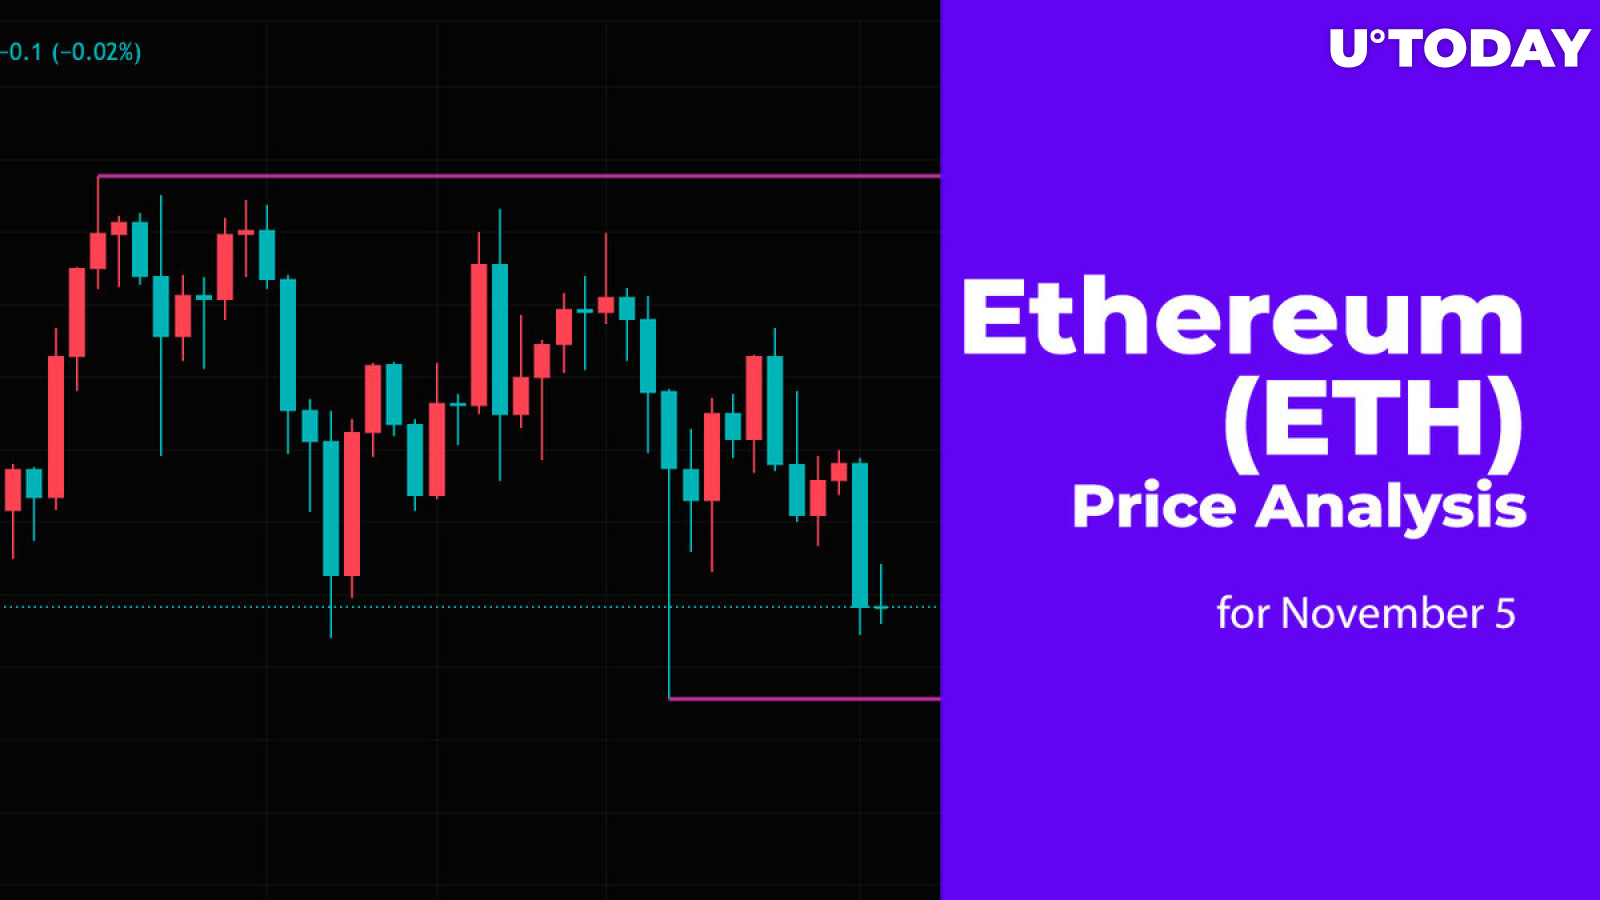 Ethereum (ETH) Price Analysis for November 5